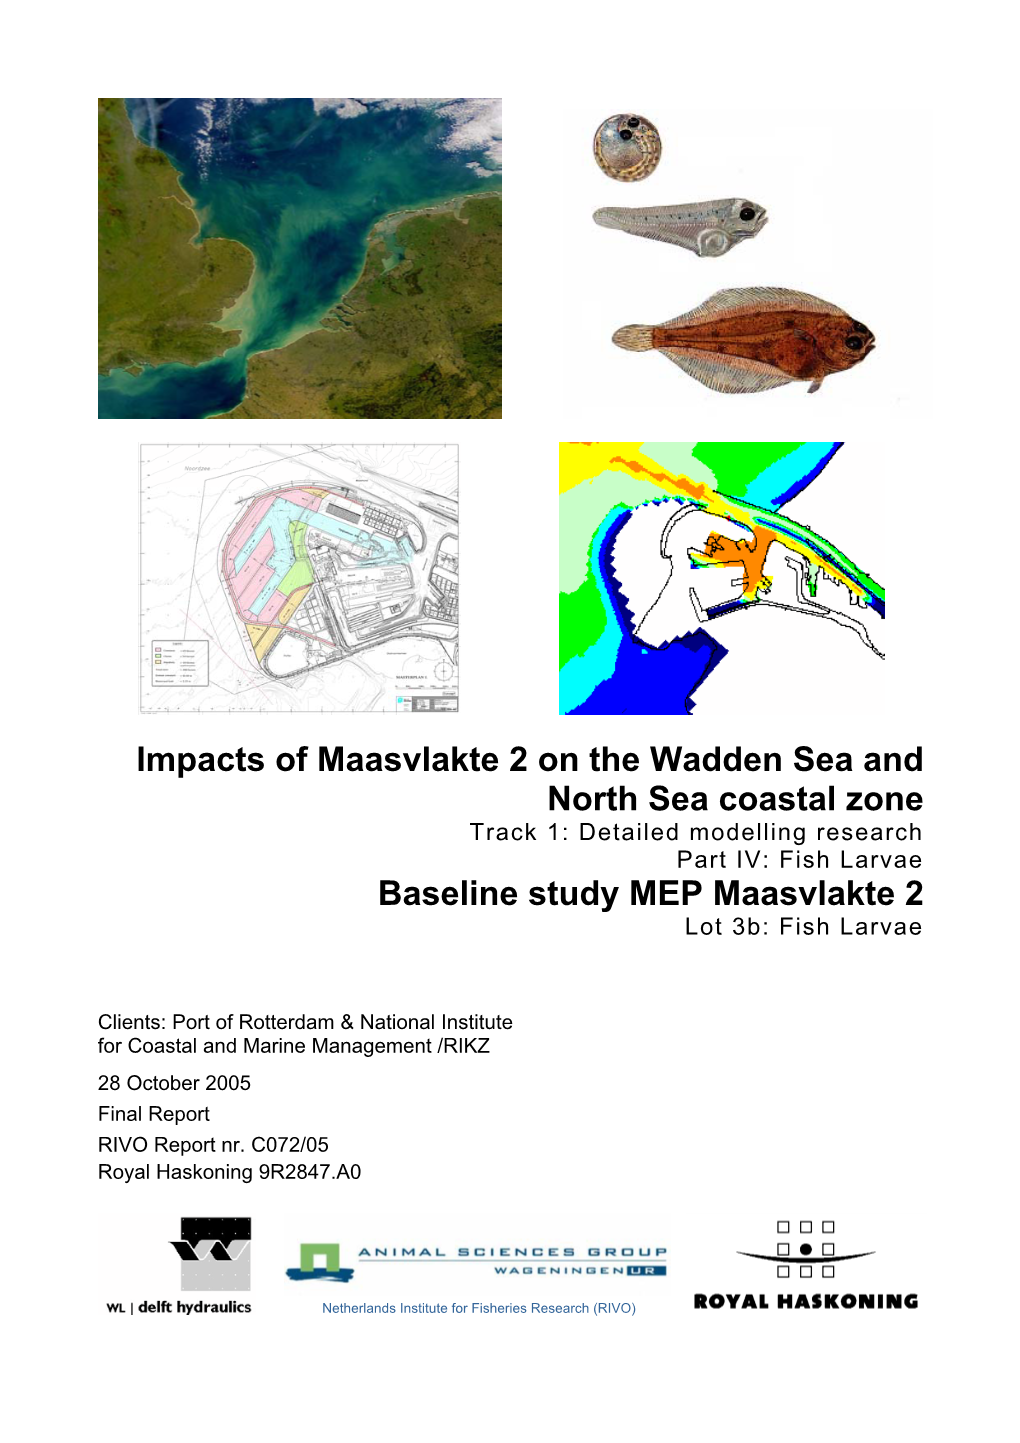 Impacts of Maasvlakte 2 on the Wadden Sea and North Sea Coastal